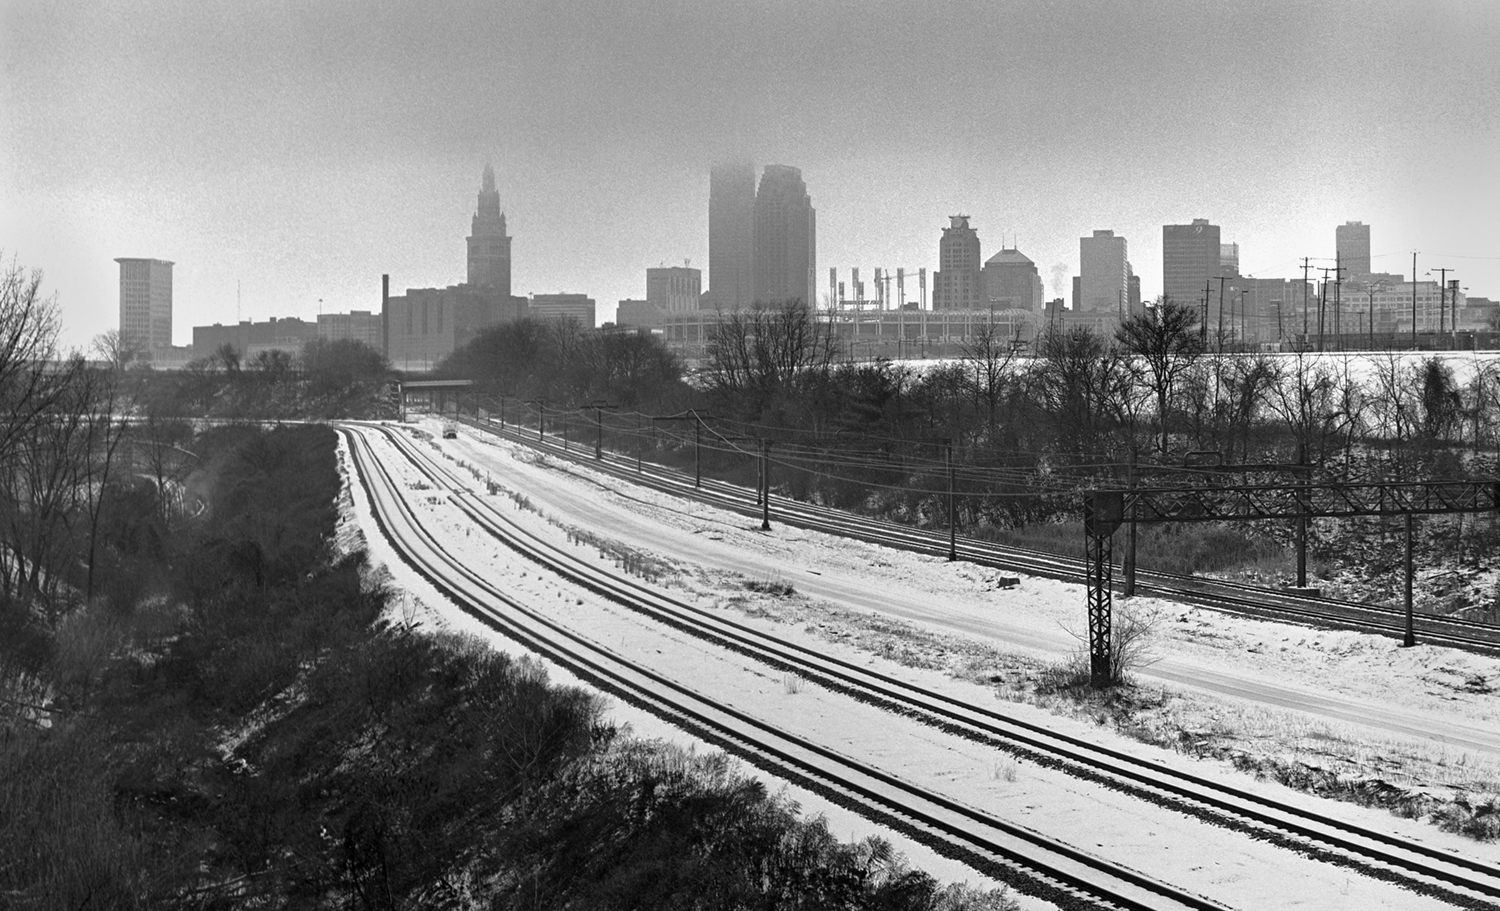  Skyline and Rails Cleveland, OH 6x6 BW film 